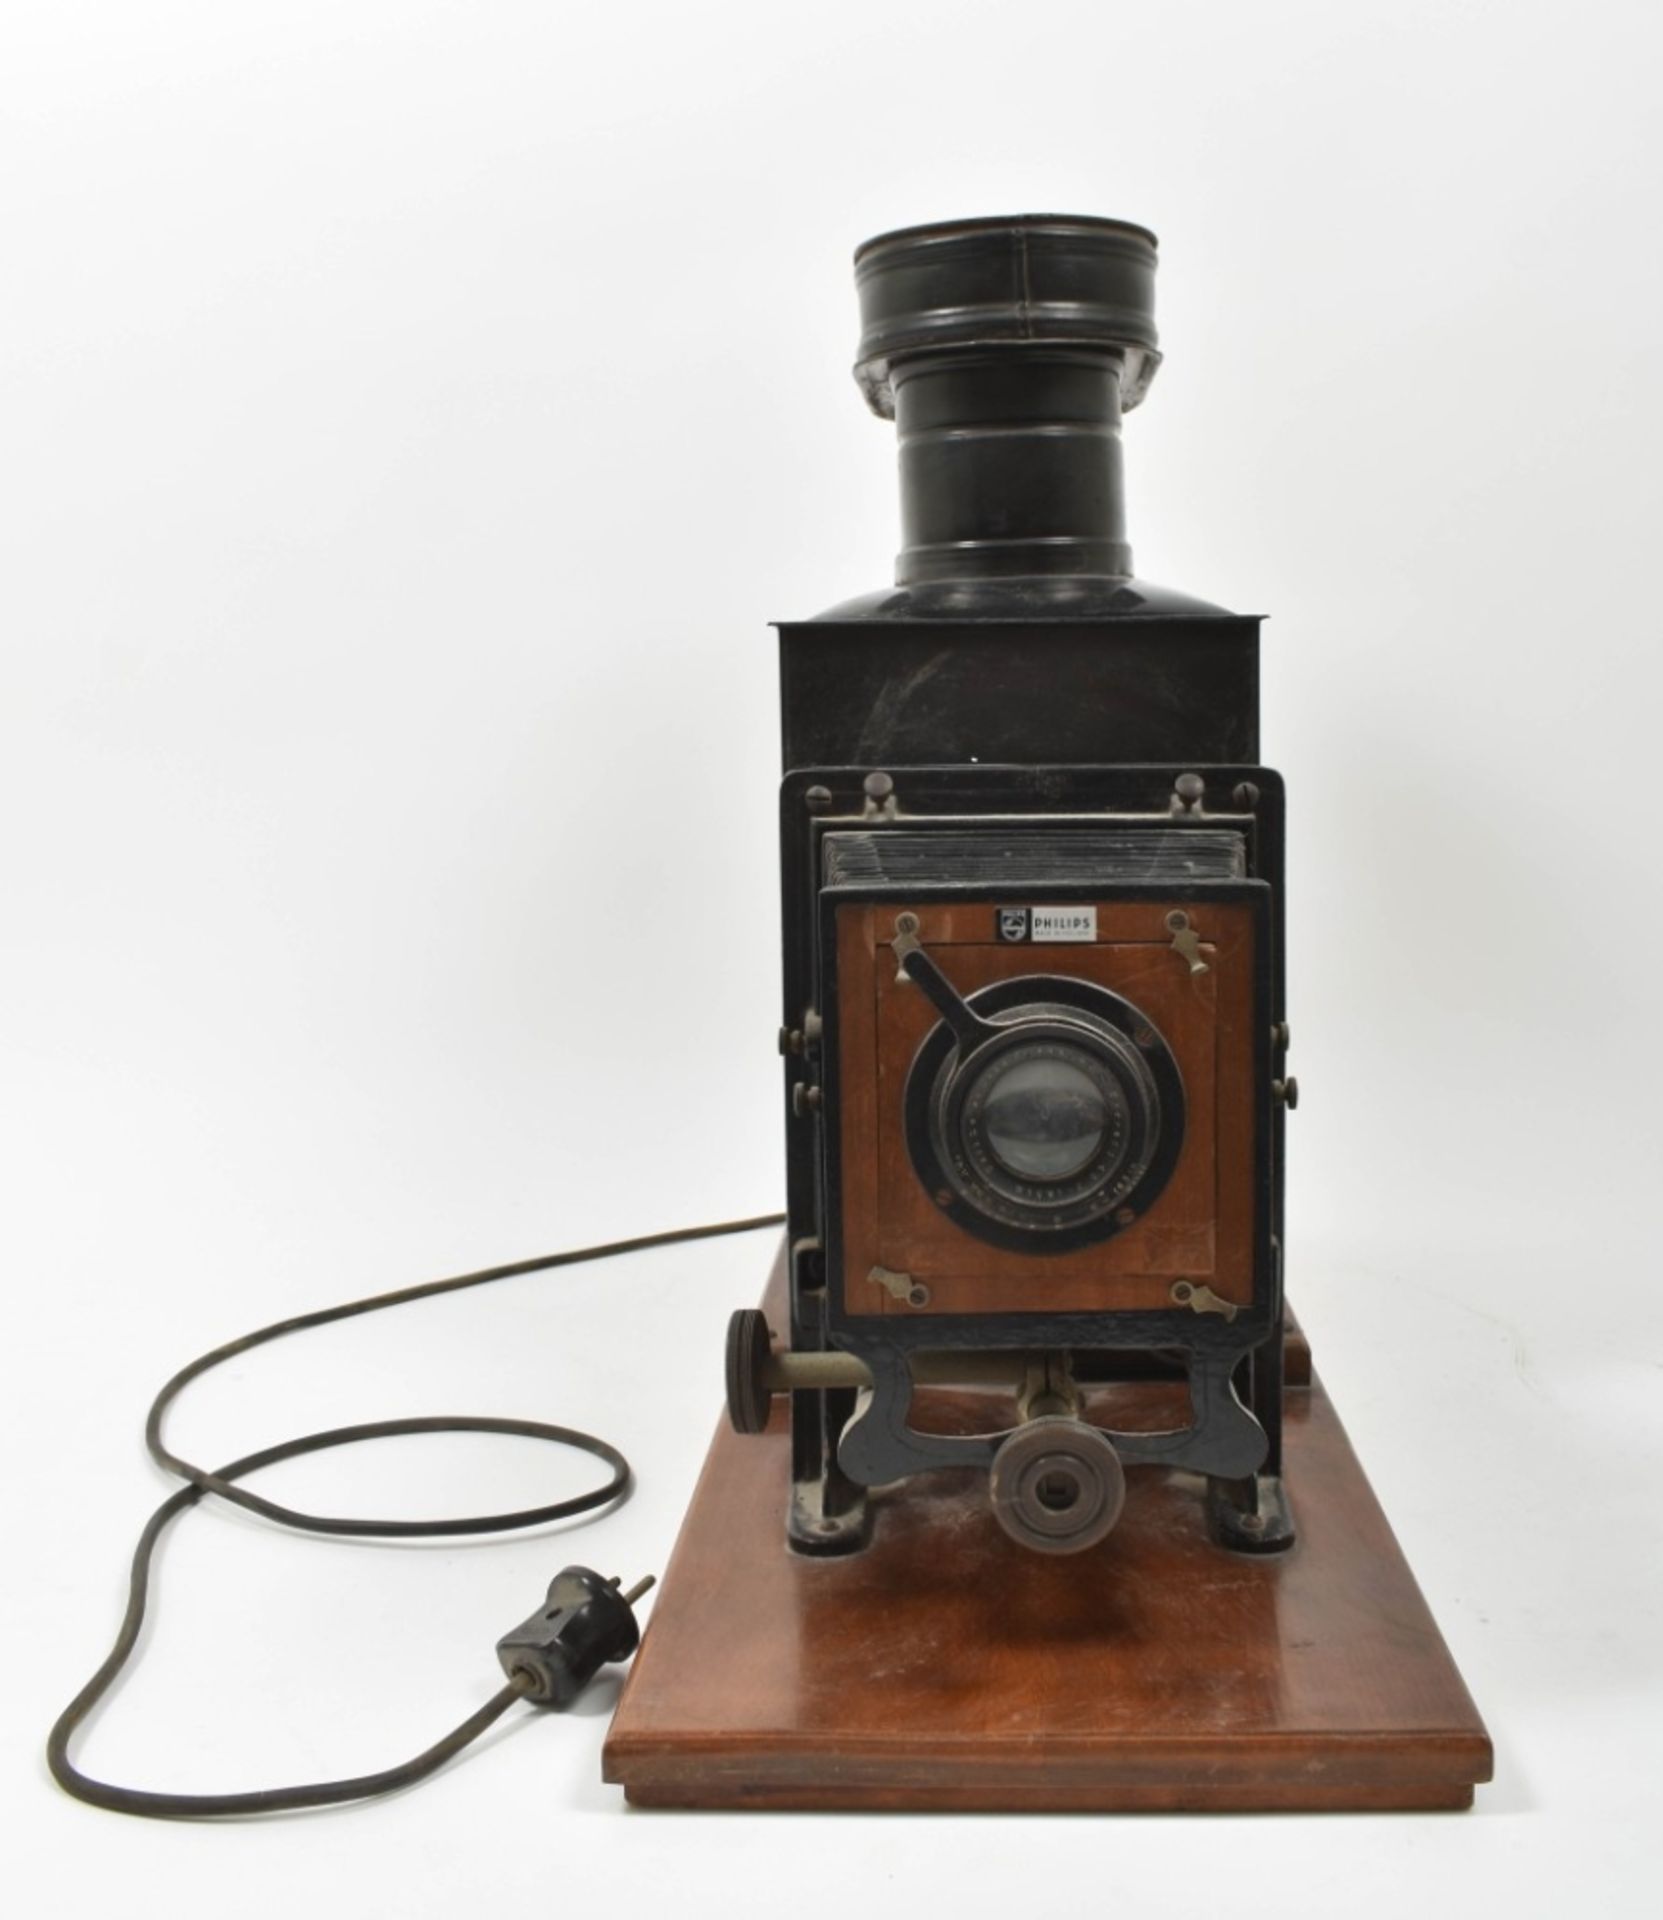 [Magic lantern] Early 20th century magic lantern and camera paraphernalia - Image 6 of 7